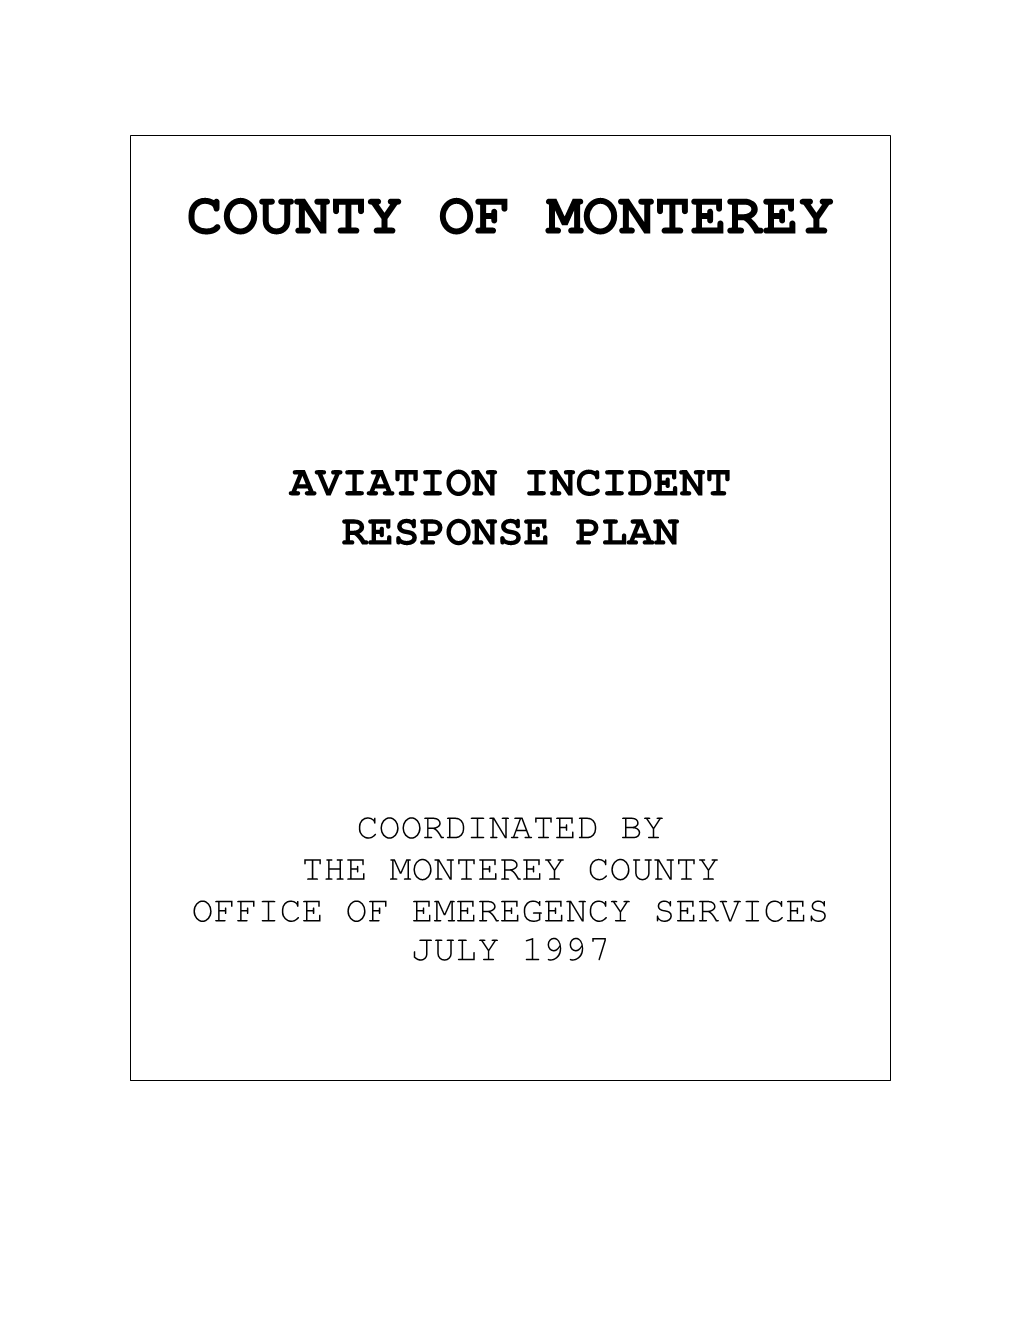 Aviation Incident Response Plan – July 1997